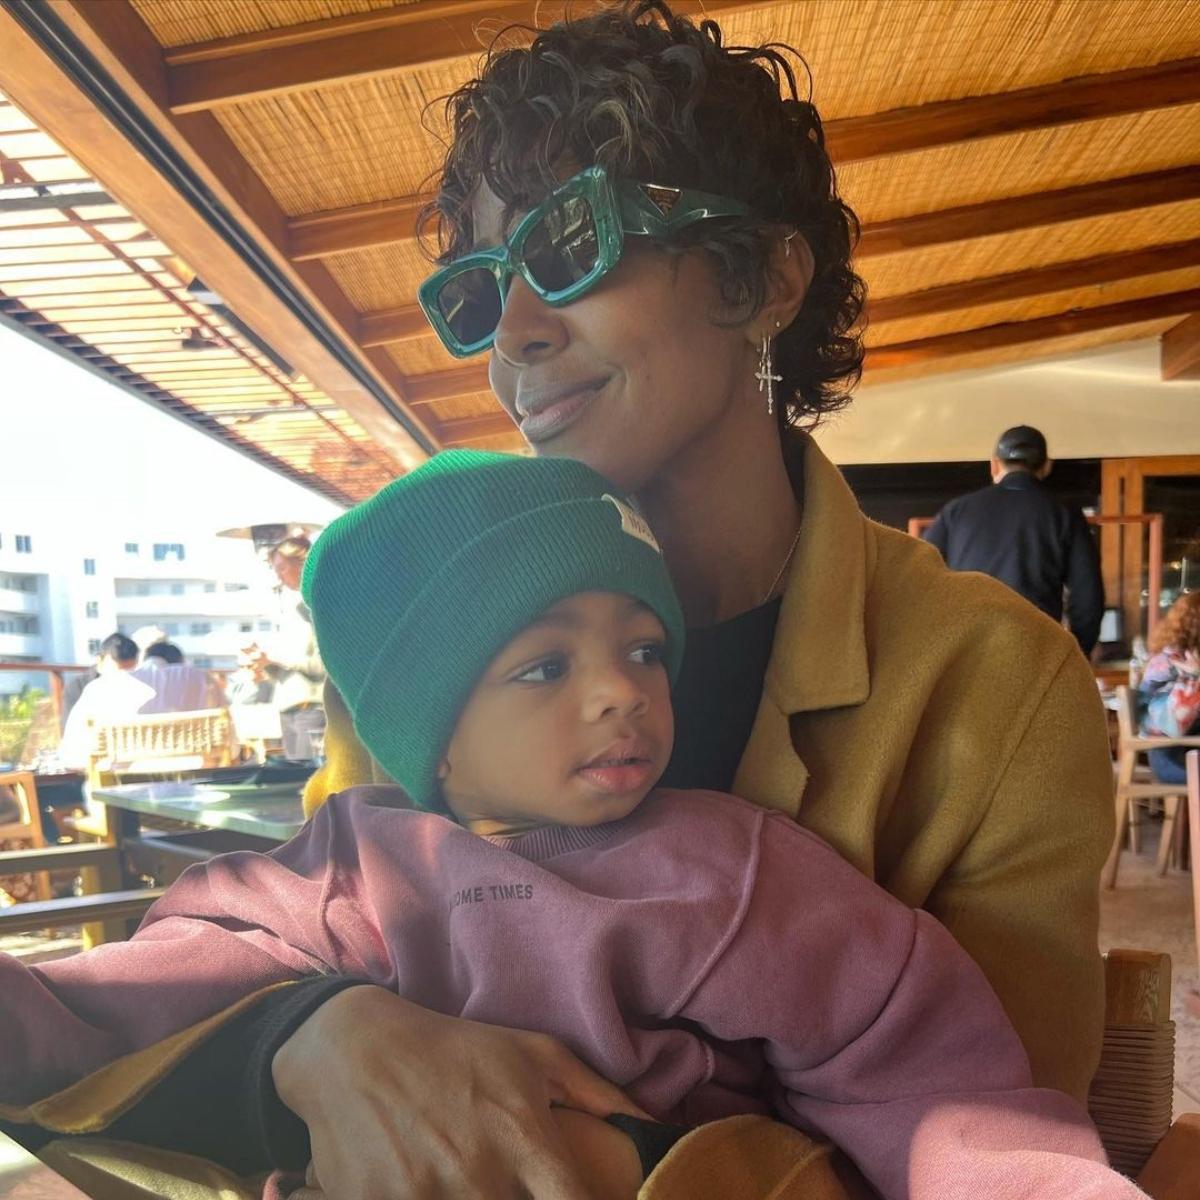 Kelly Rowland et son fils Noah Weatherspoon posent ensemble pour une photo.